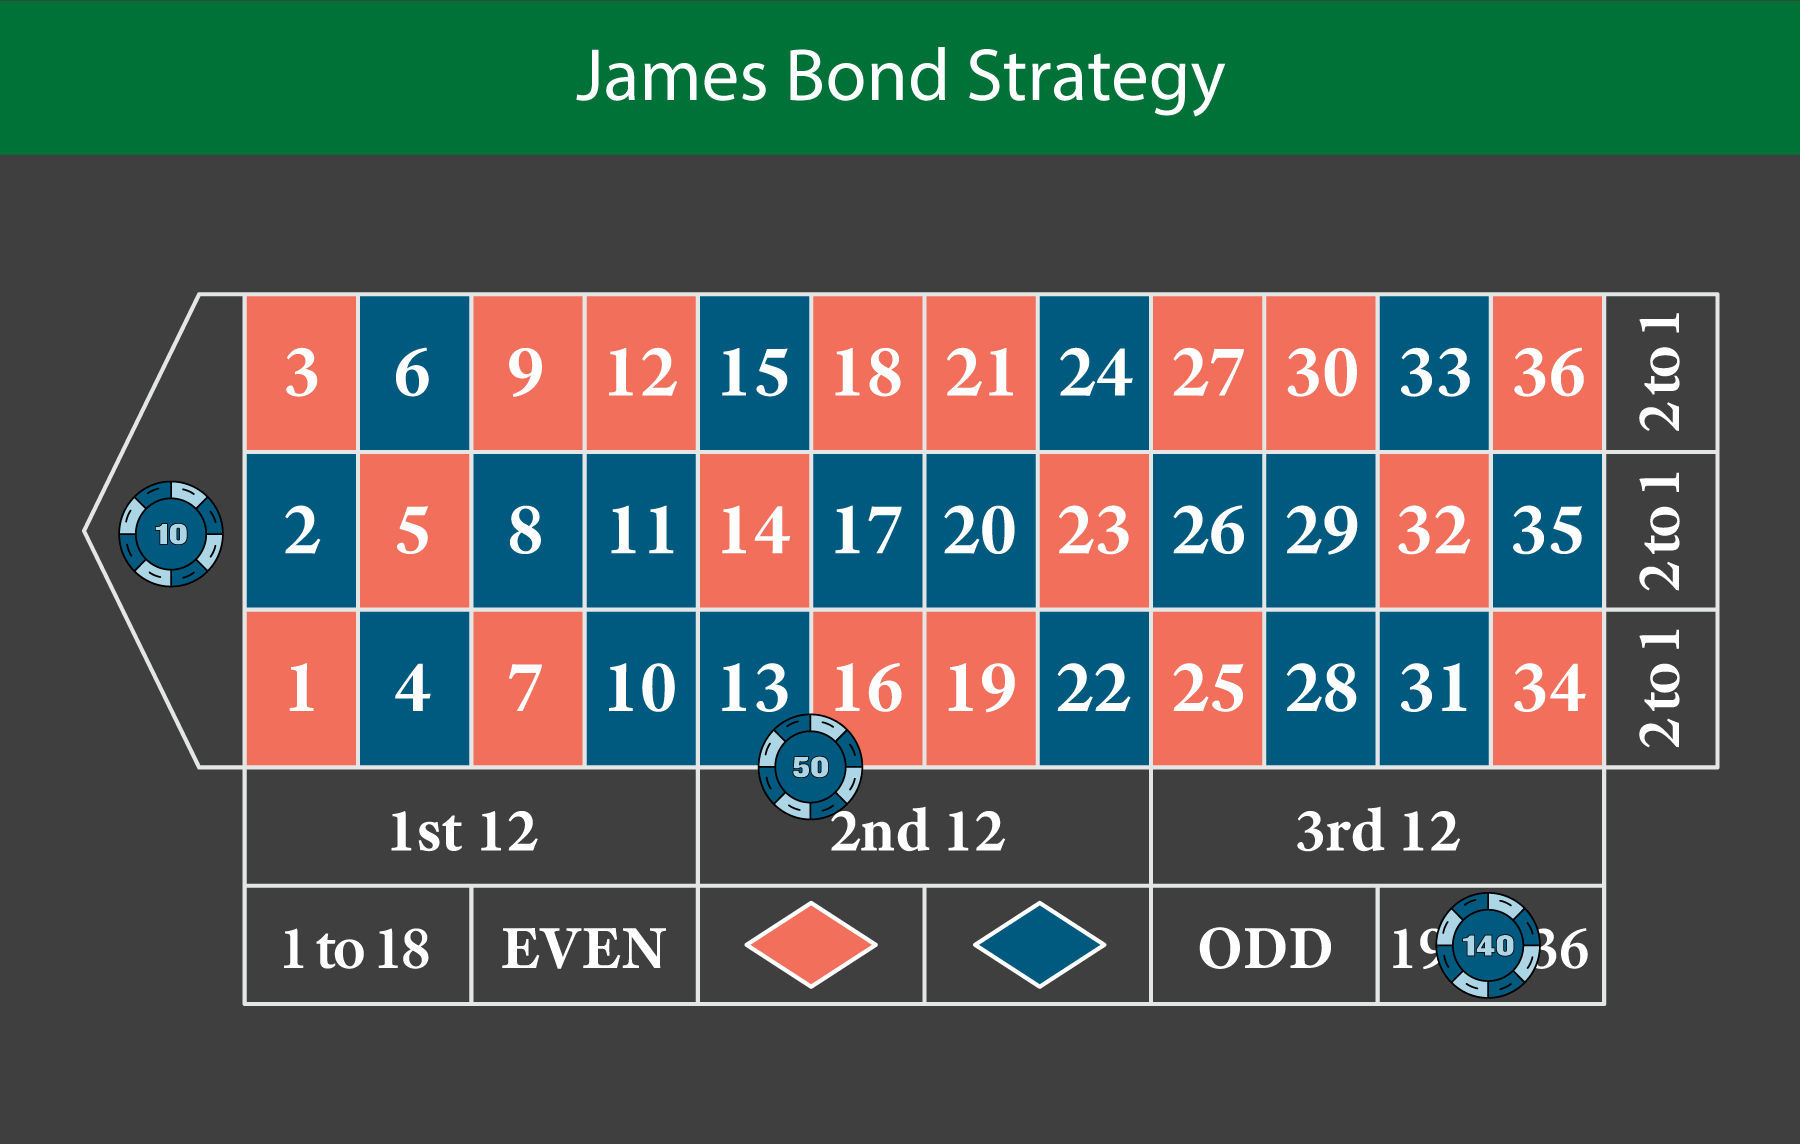 James Bond Strategy  - - Emirates Casino Roulette Guide - UAE Casino - 
UAE Roulette - Emirates Roulette Guide - Emirates roulette